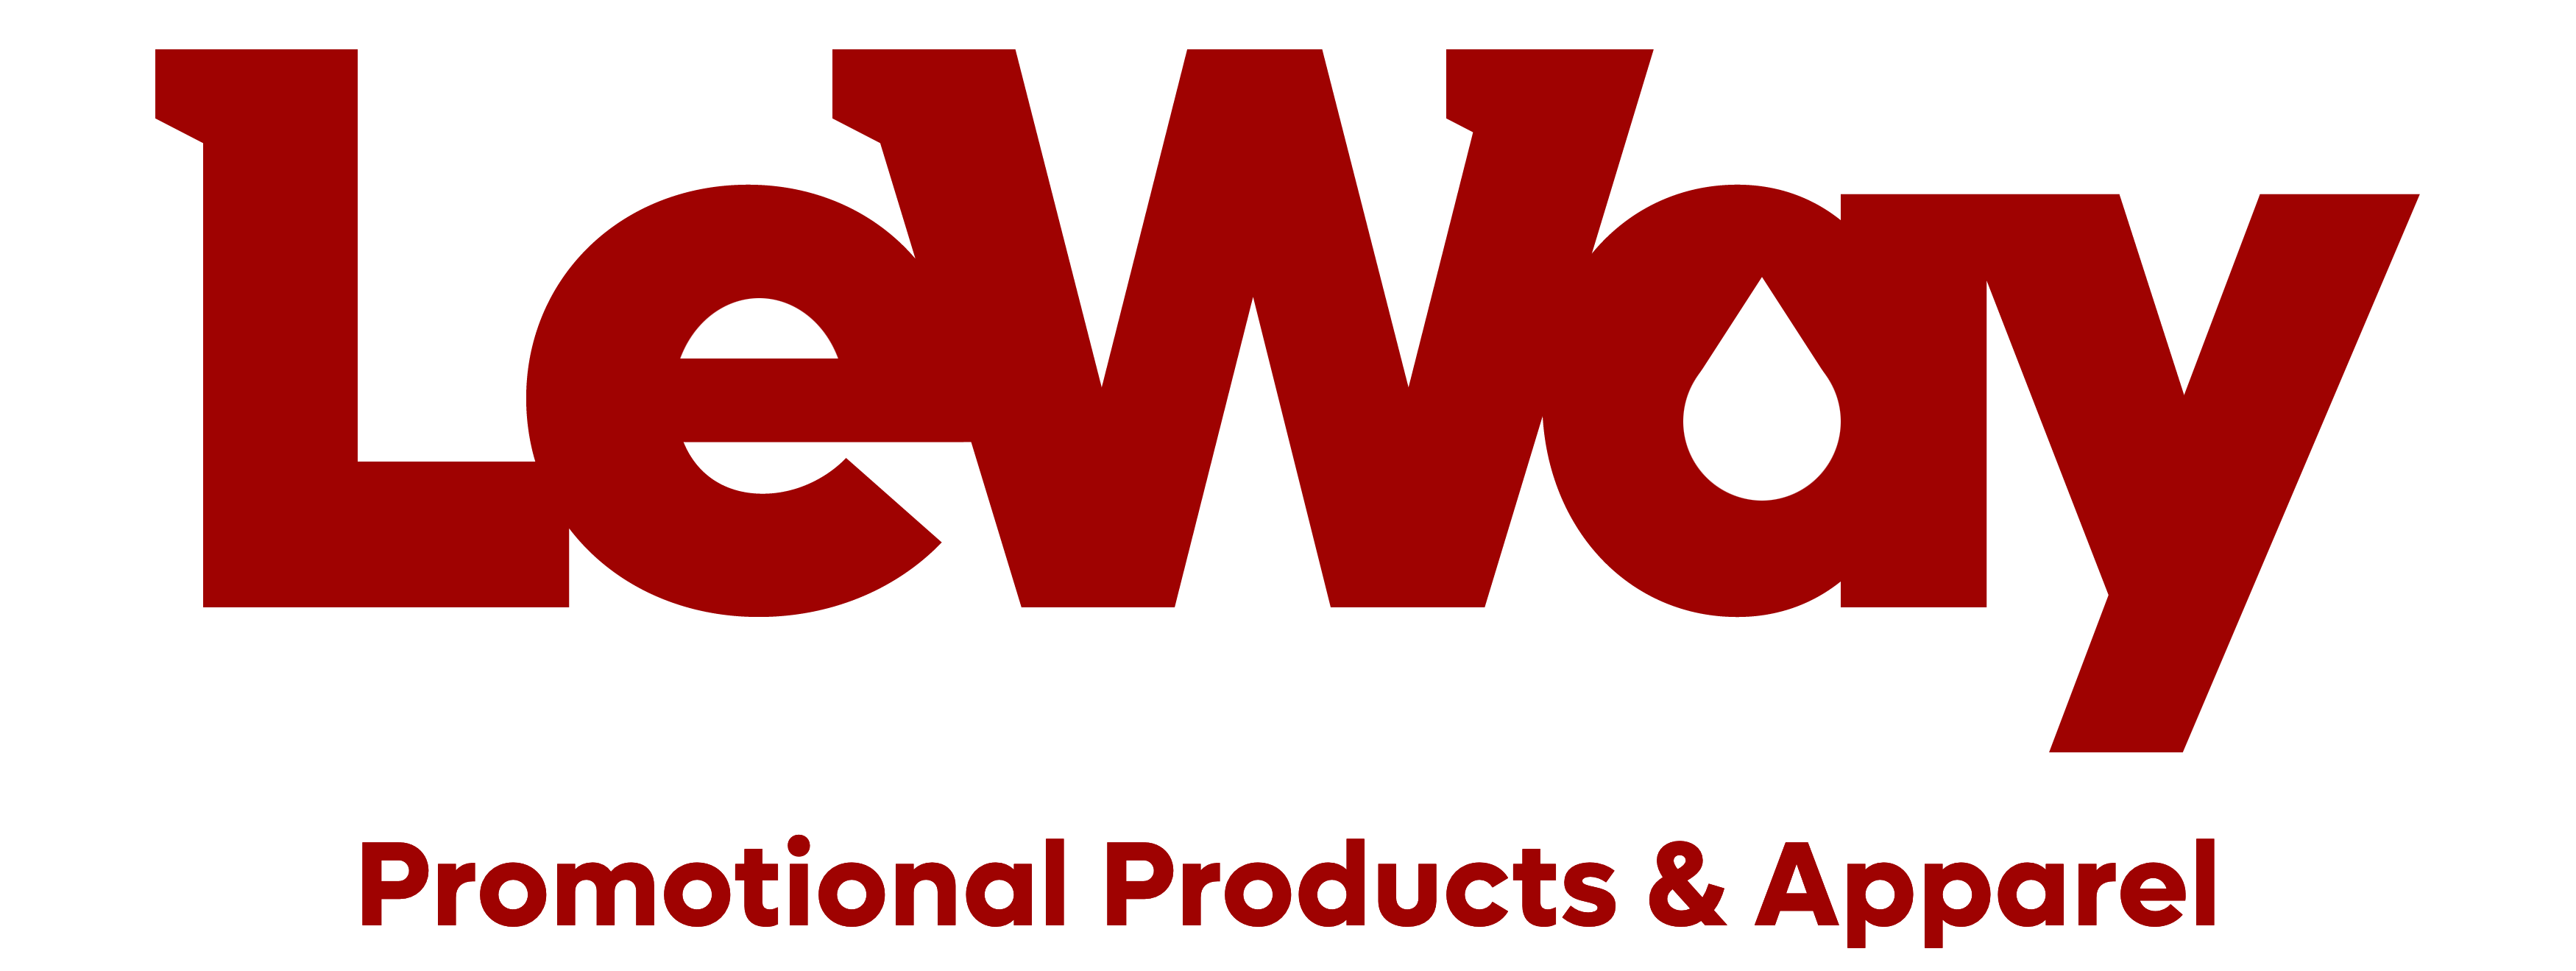 Leway Enterprises's Logo